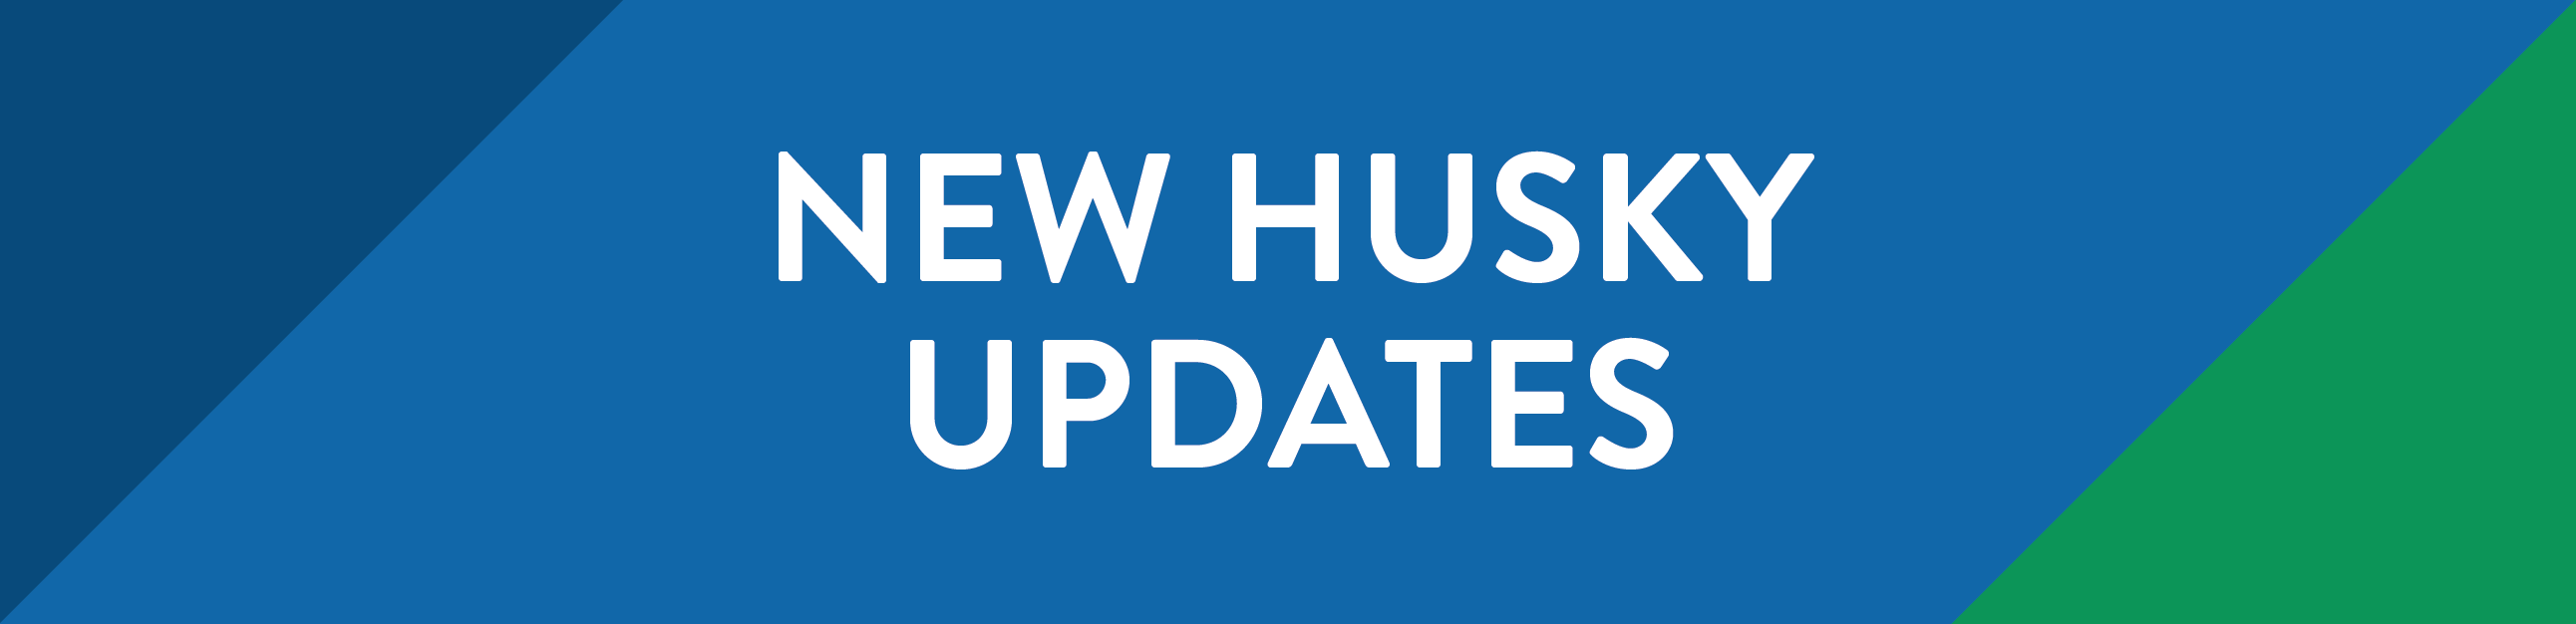 New Husky Updates Banner